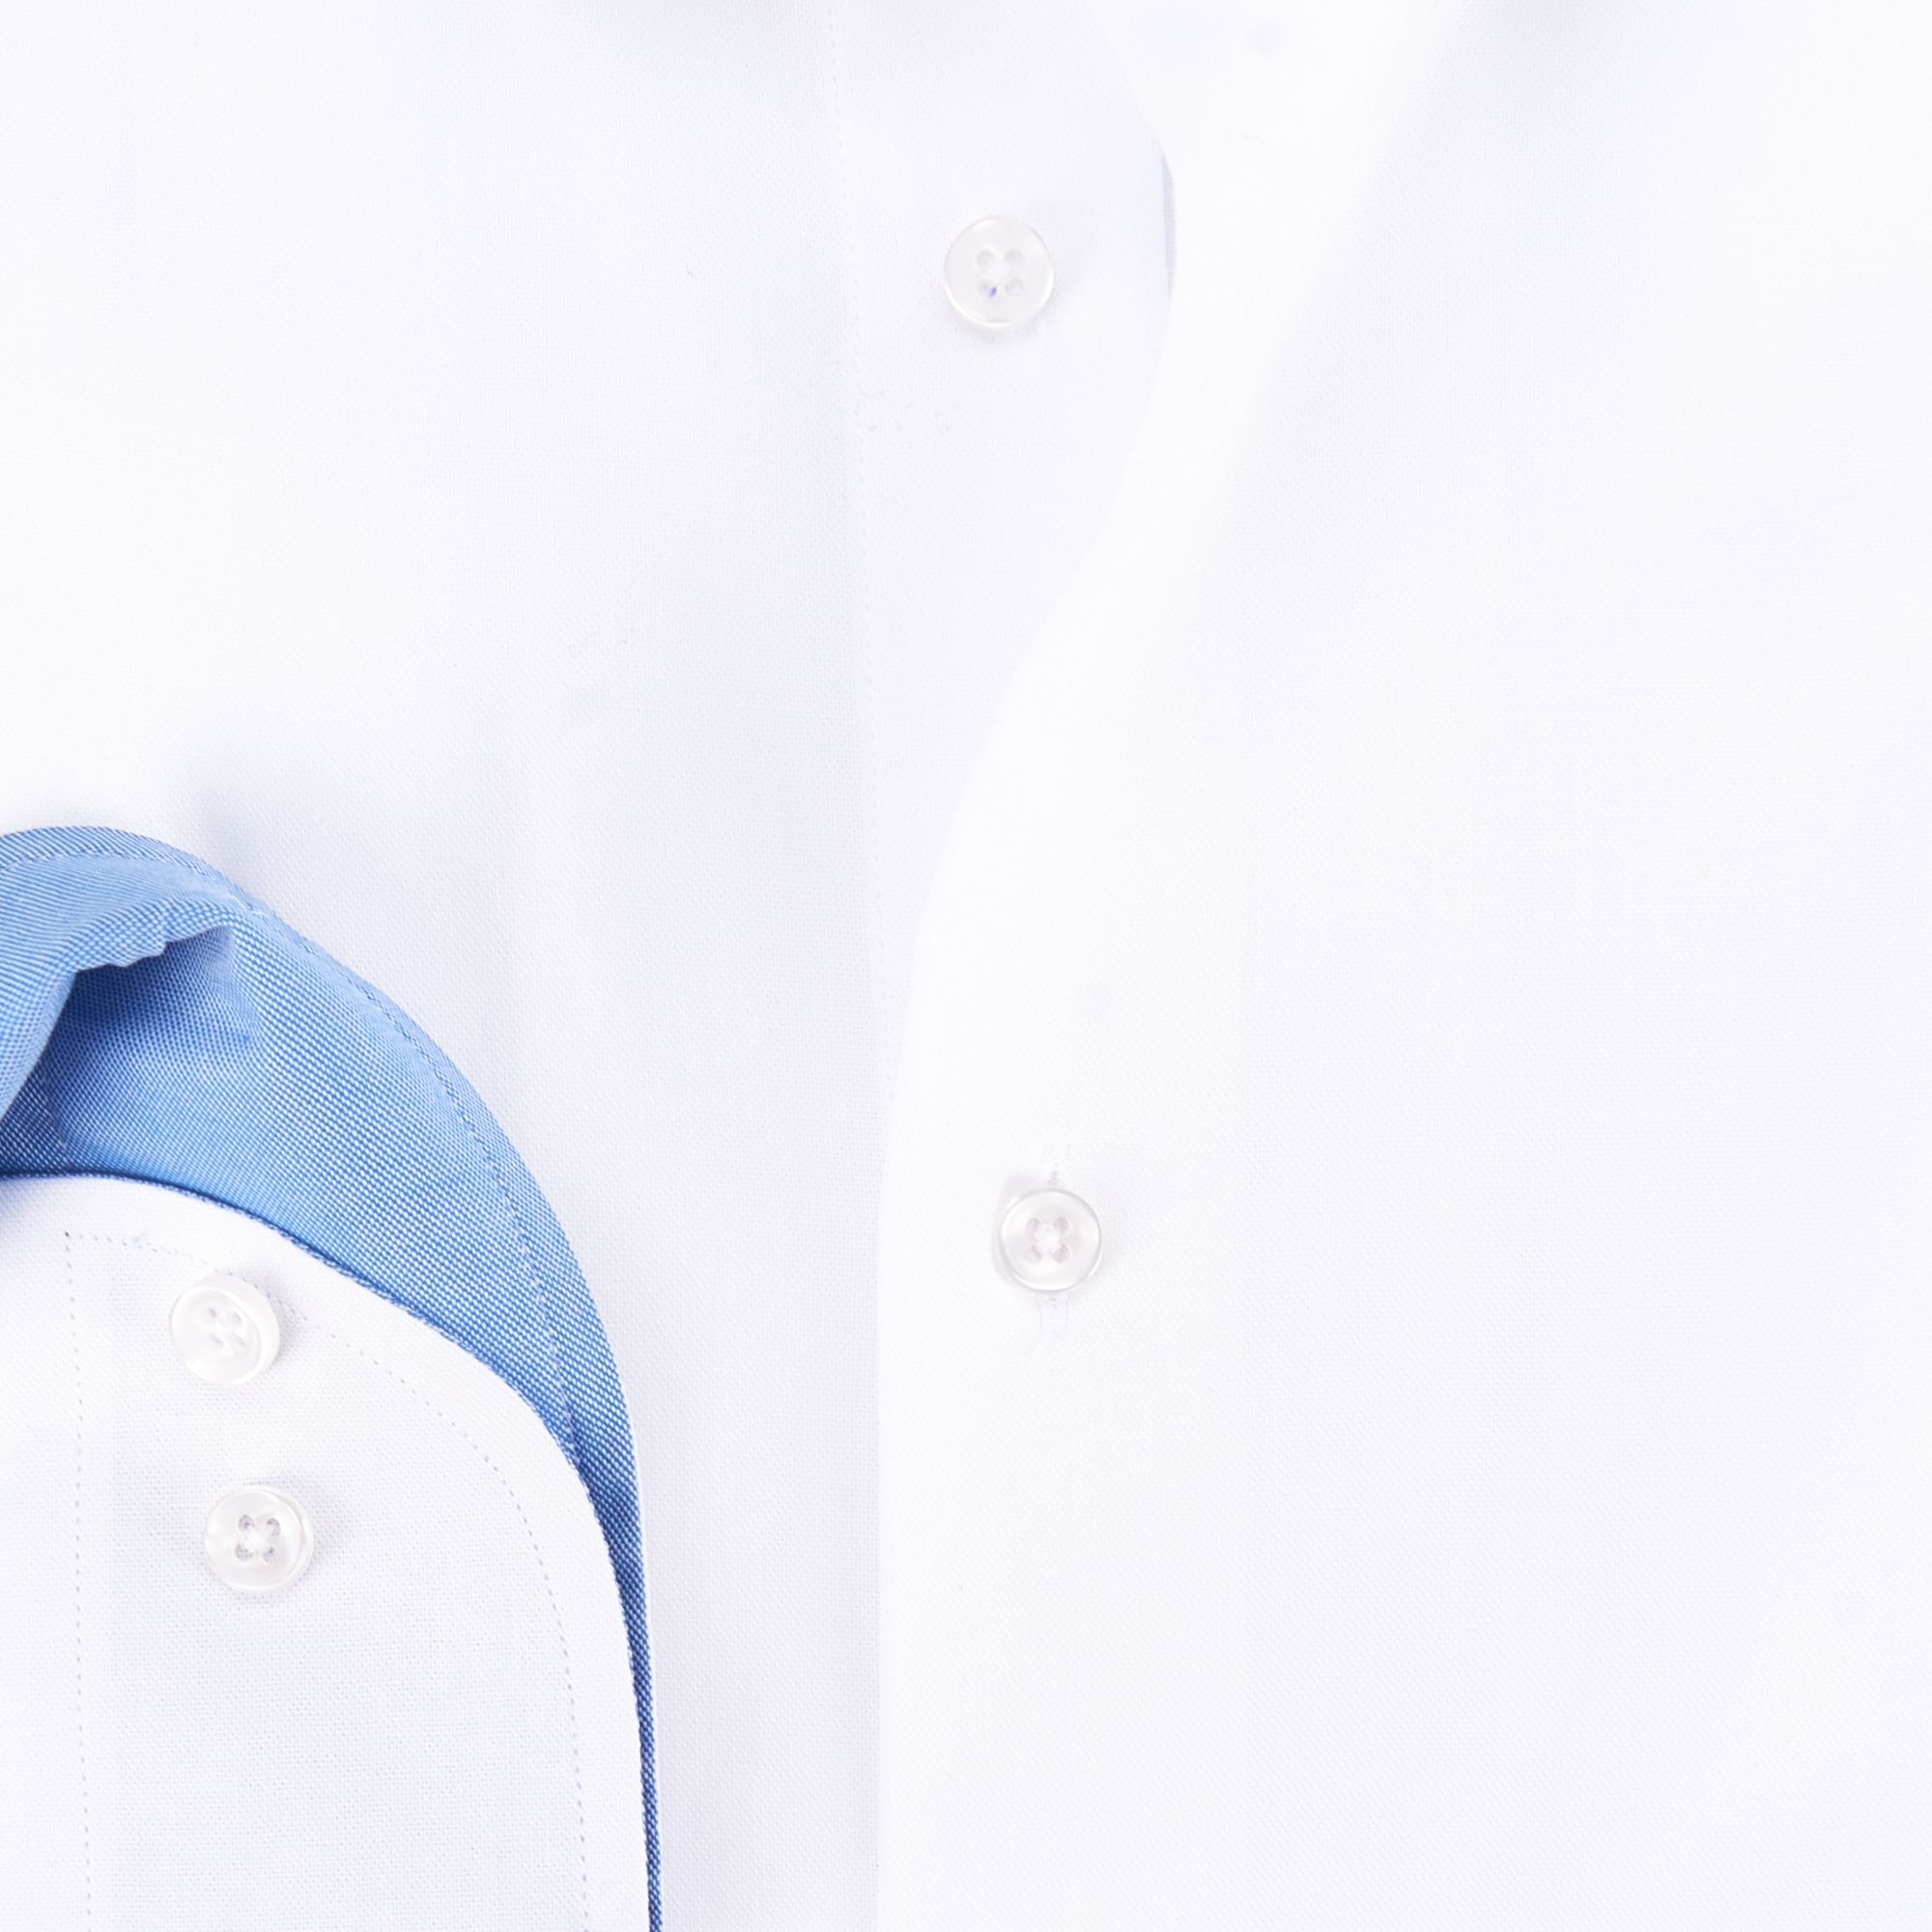 The BLUEPRINT Premium Trendy overhemd LM WHITE 084497-001-L